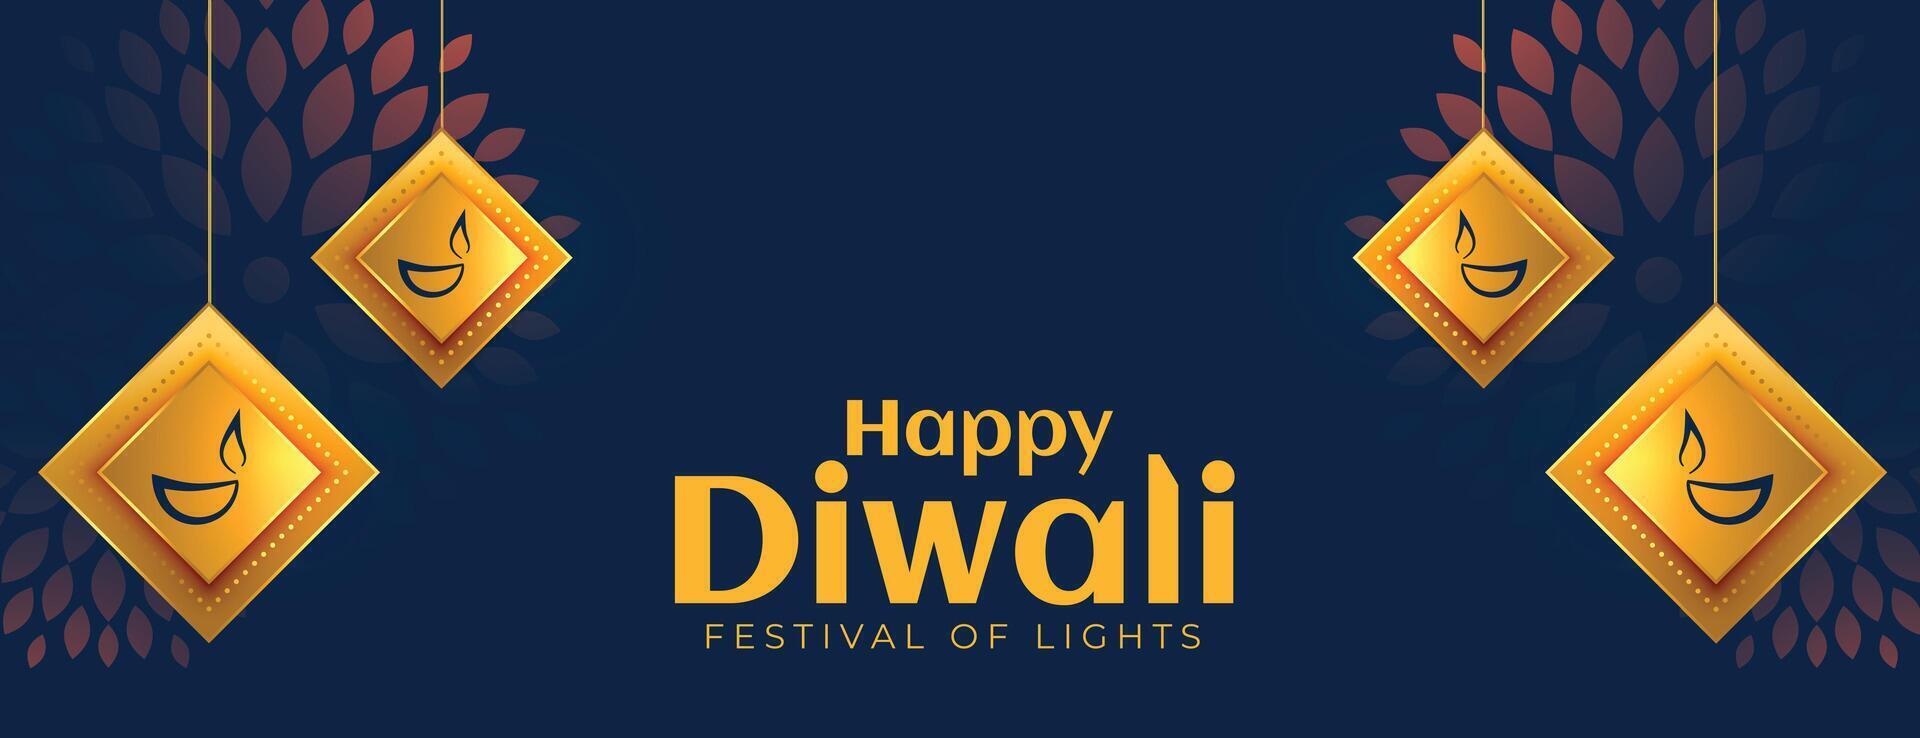 indian cultural happy diwali festival greeting banner vector